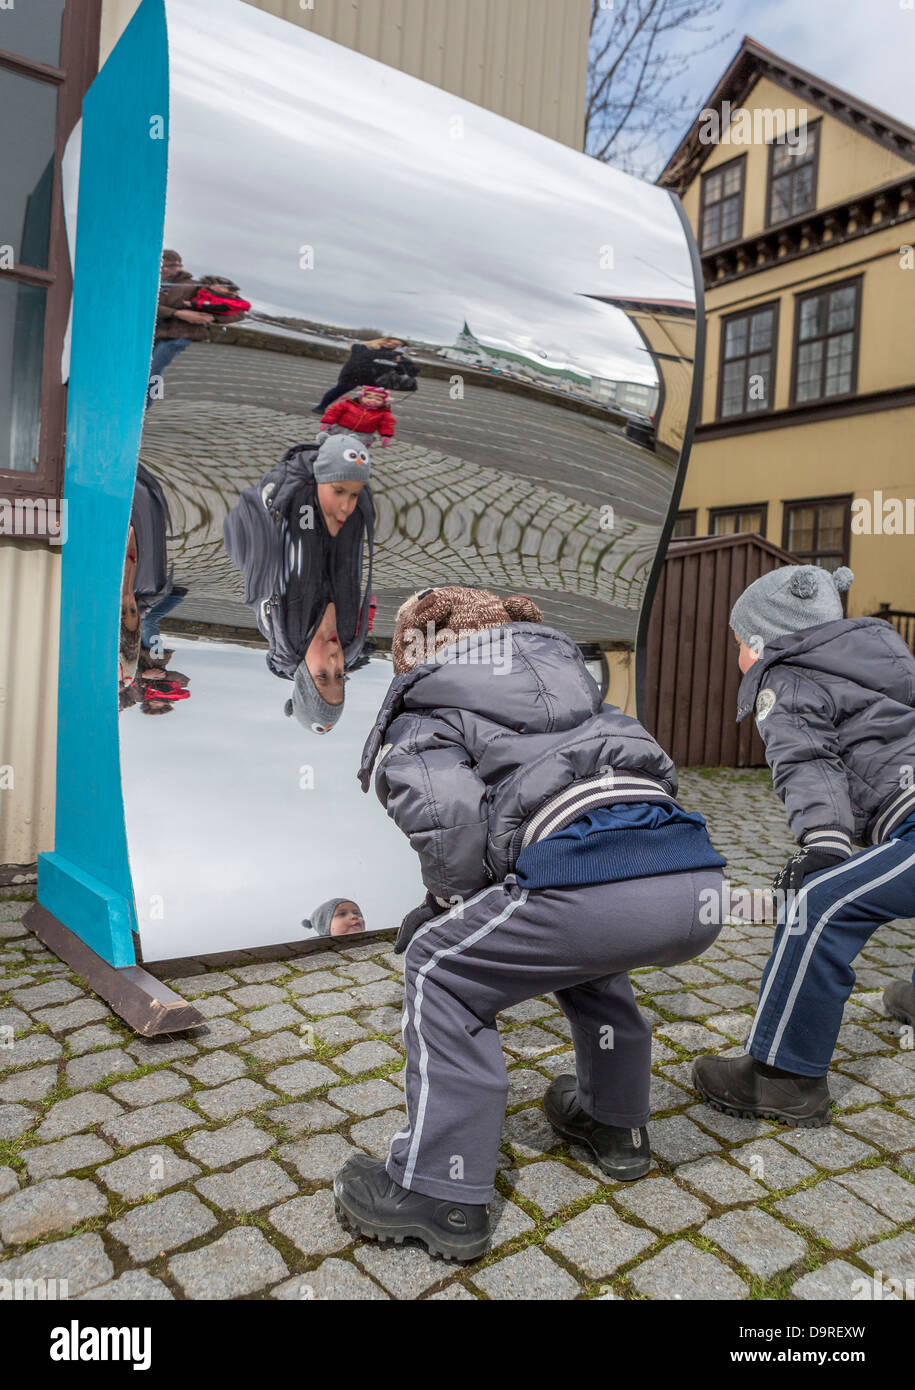 Children looking into fun mirror, Children's Cultural Festival, Reykjavik Iceland. Stock Photo